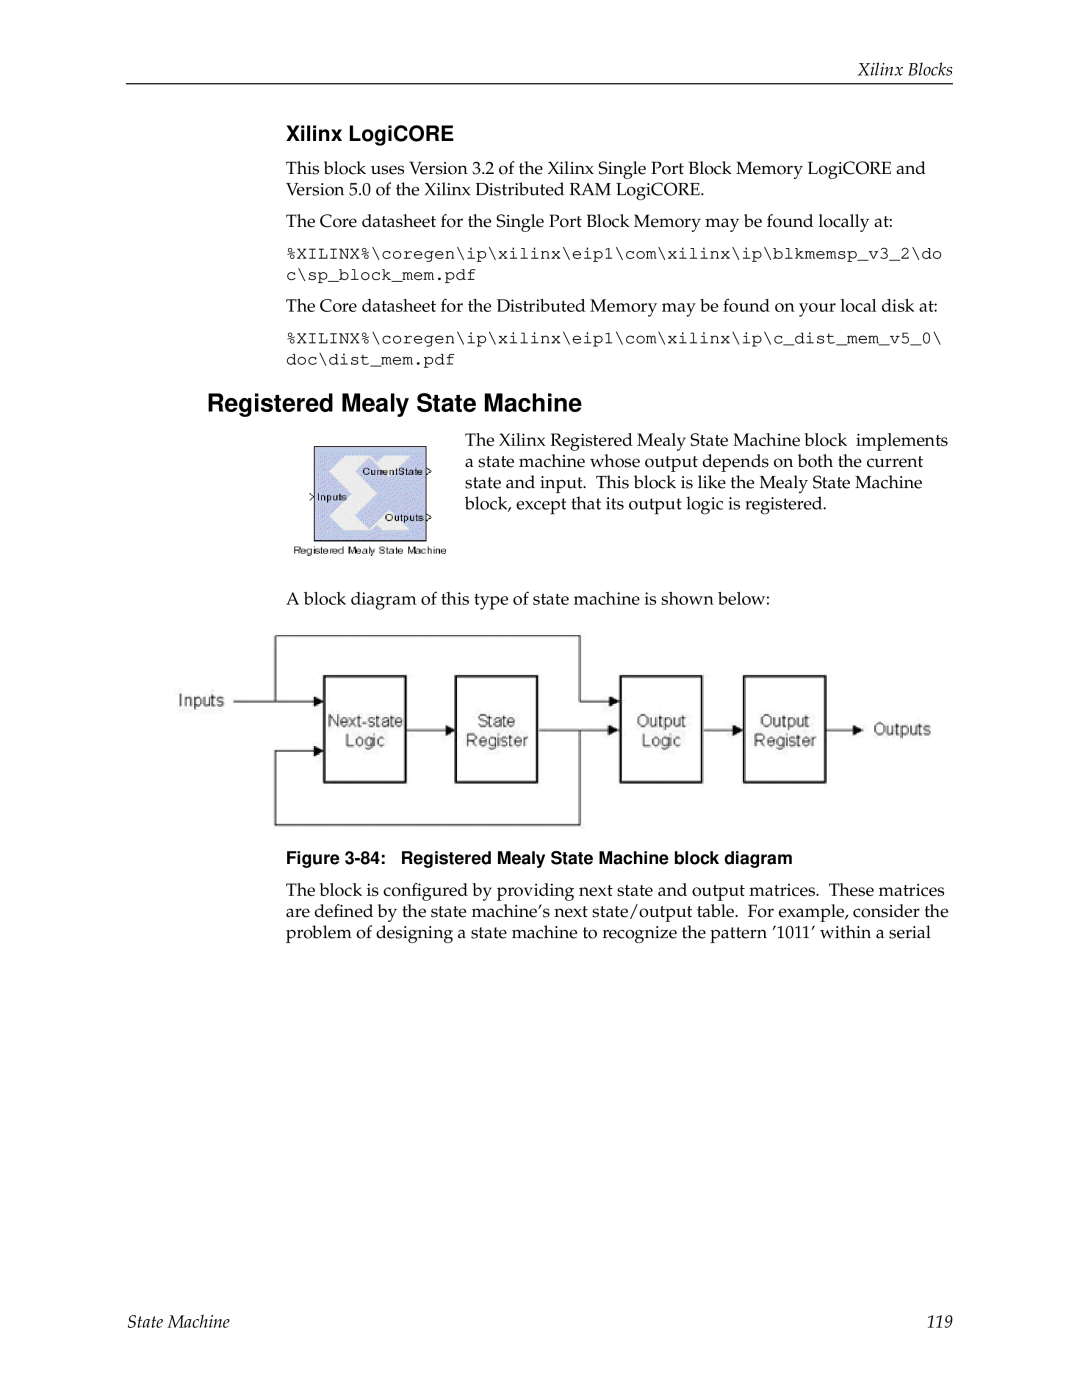 Xilinx V2.1 manual Registered Mealy State Machine, Xilinx LogiCORE, Xilinx Blocks 